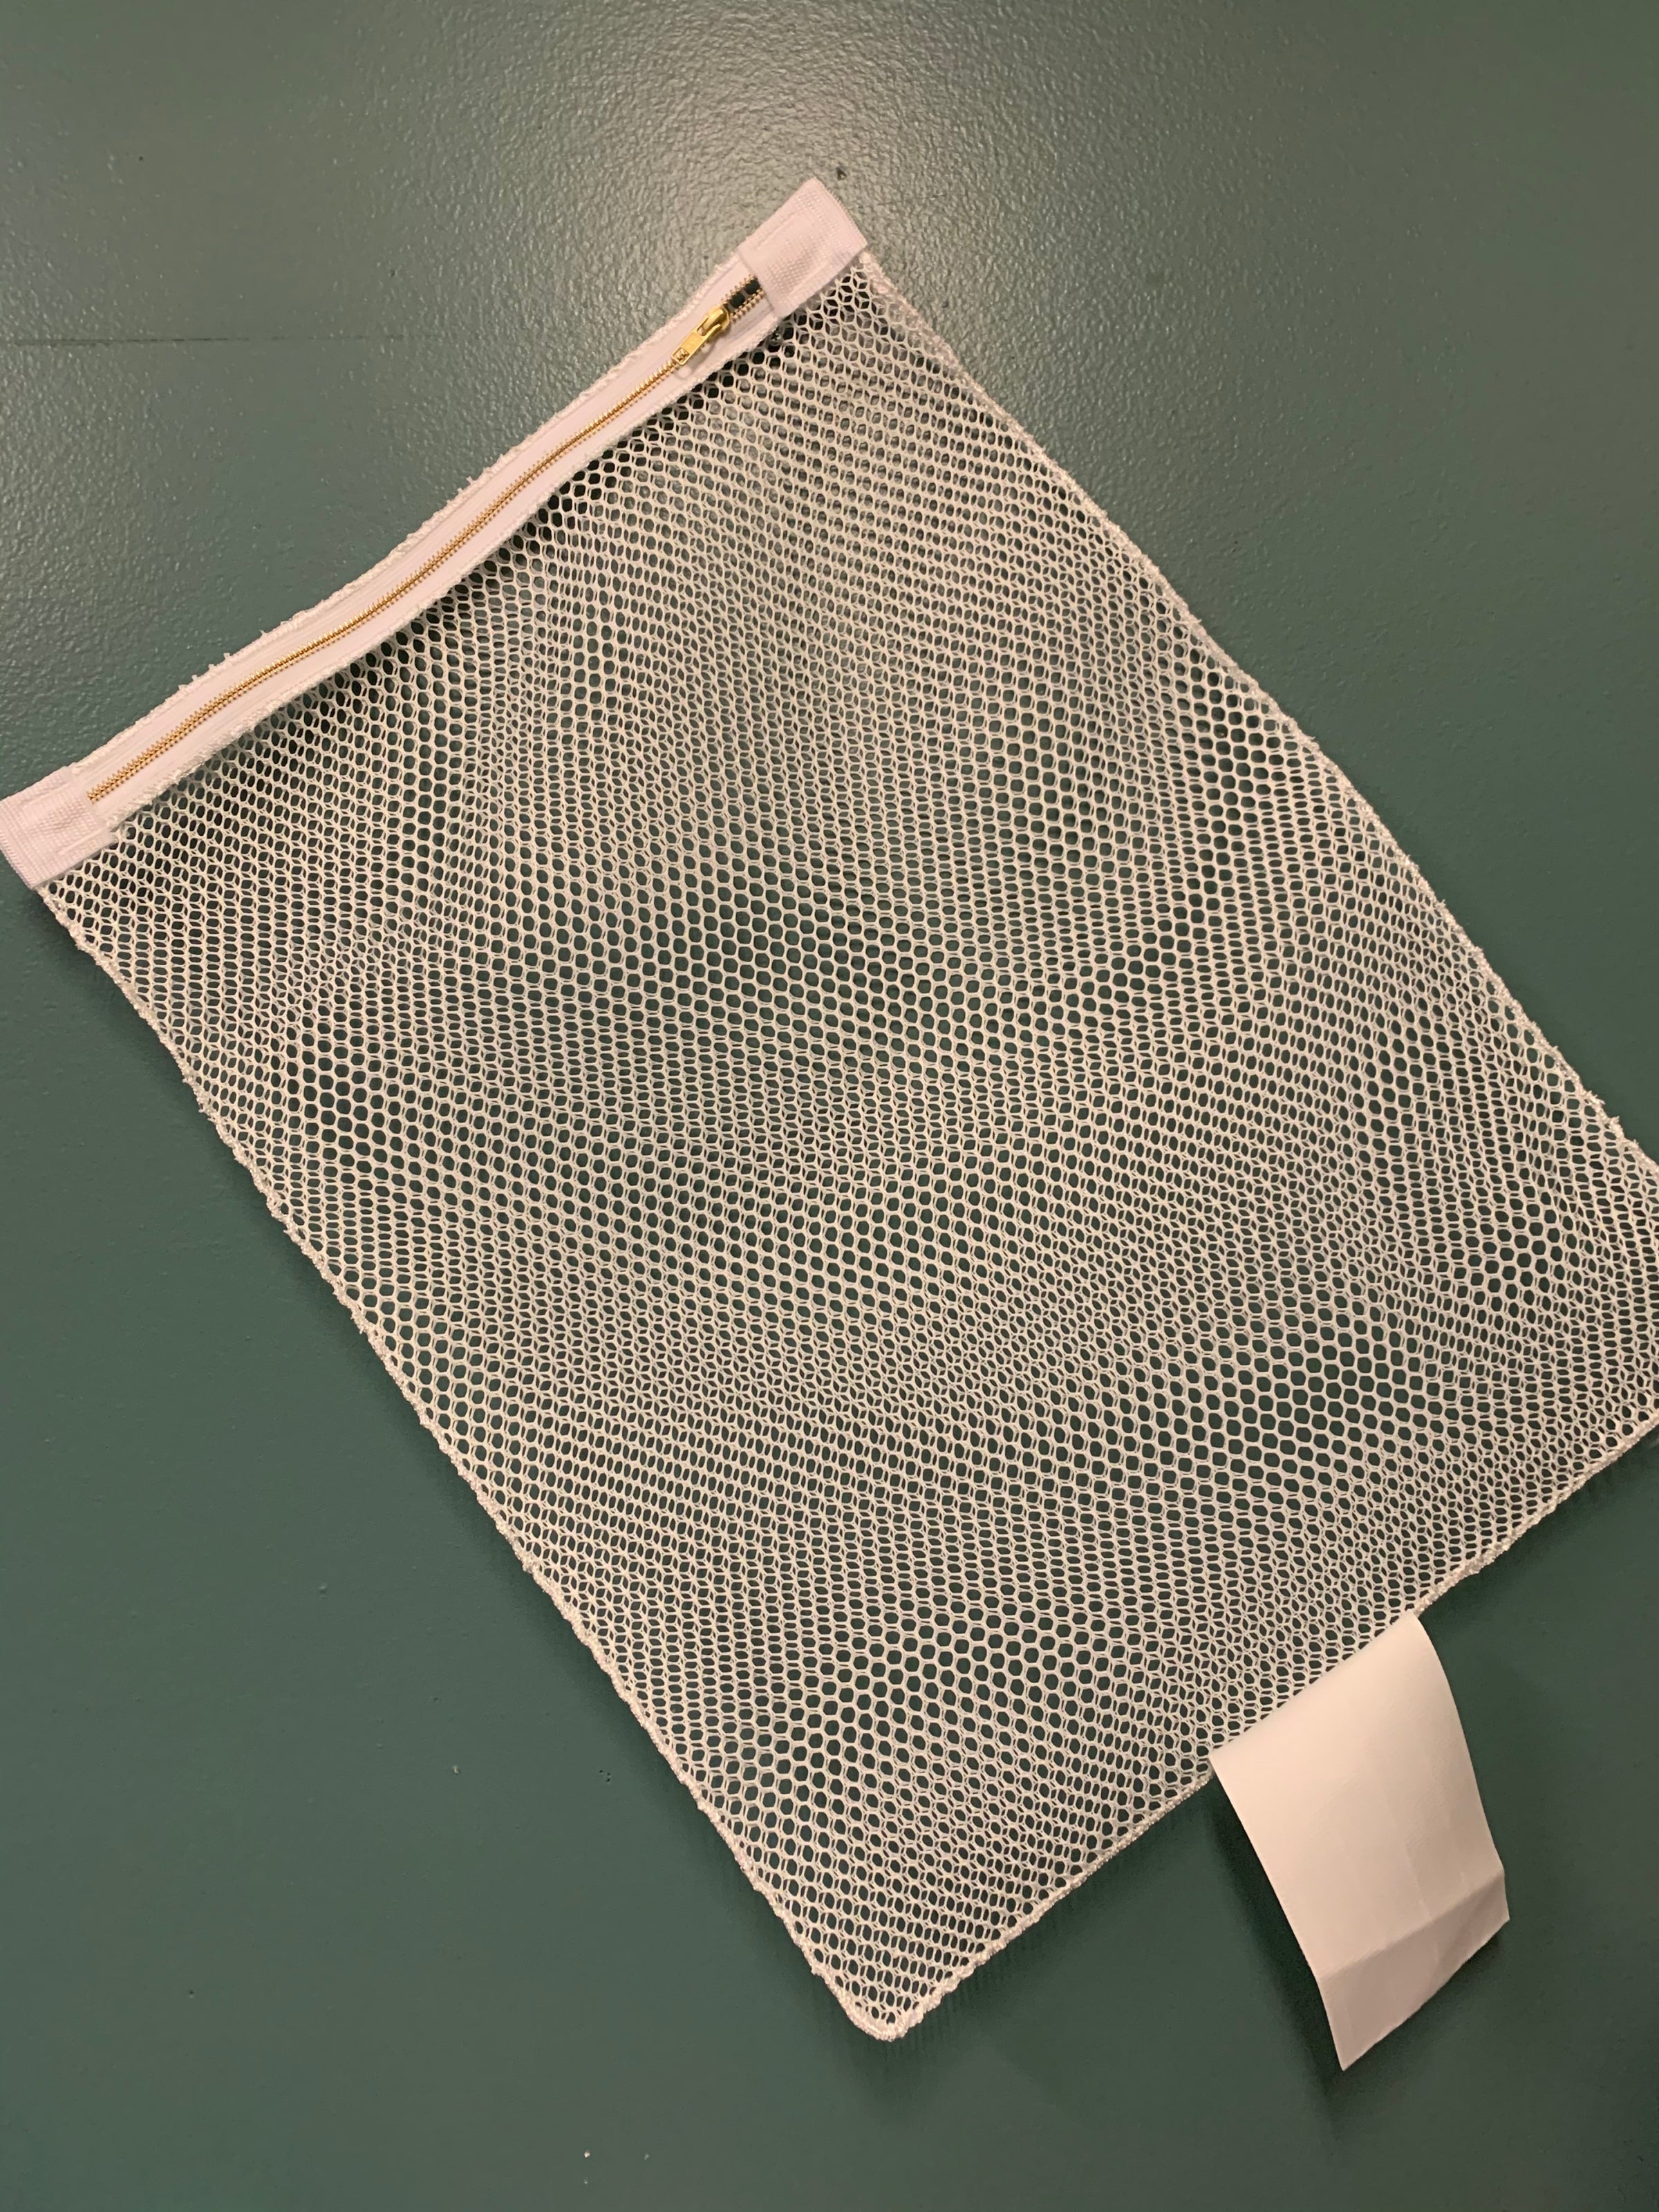 Green Mesh Net Draw String Laundry Bags 18